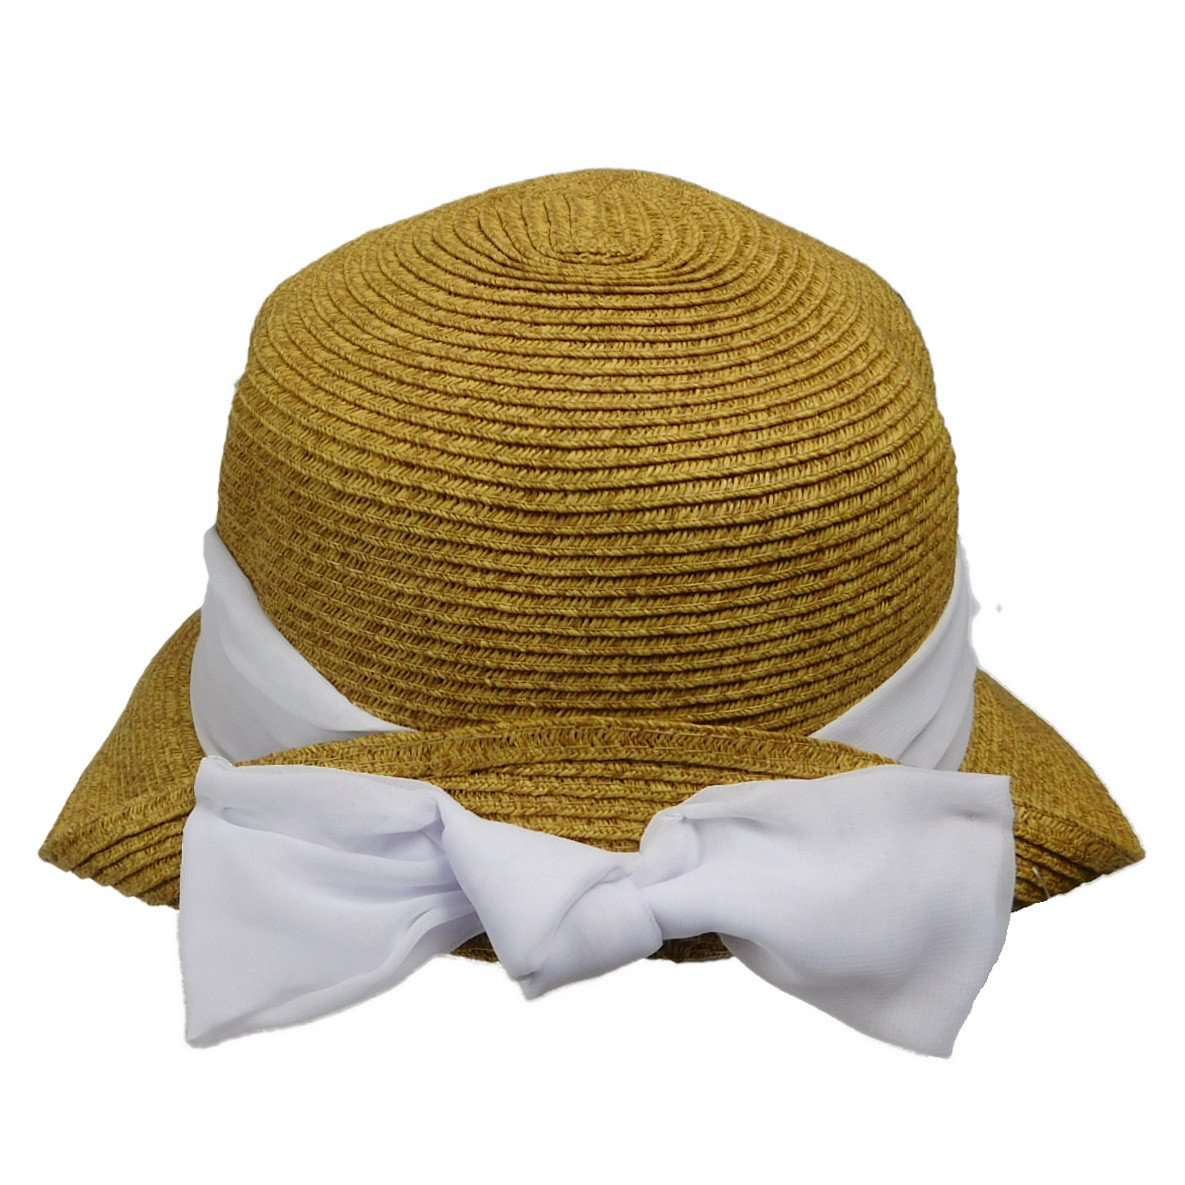 Small Bonnet Hat with Scarf - Boardwalk Style Cloche Boardwalk Style Hats da556wh White Medium (57 cm) 